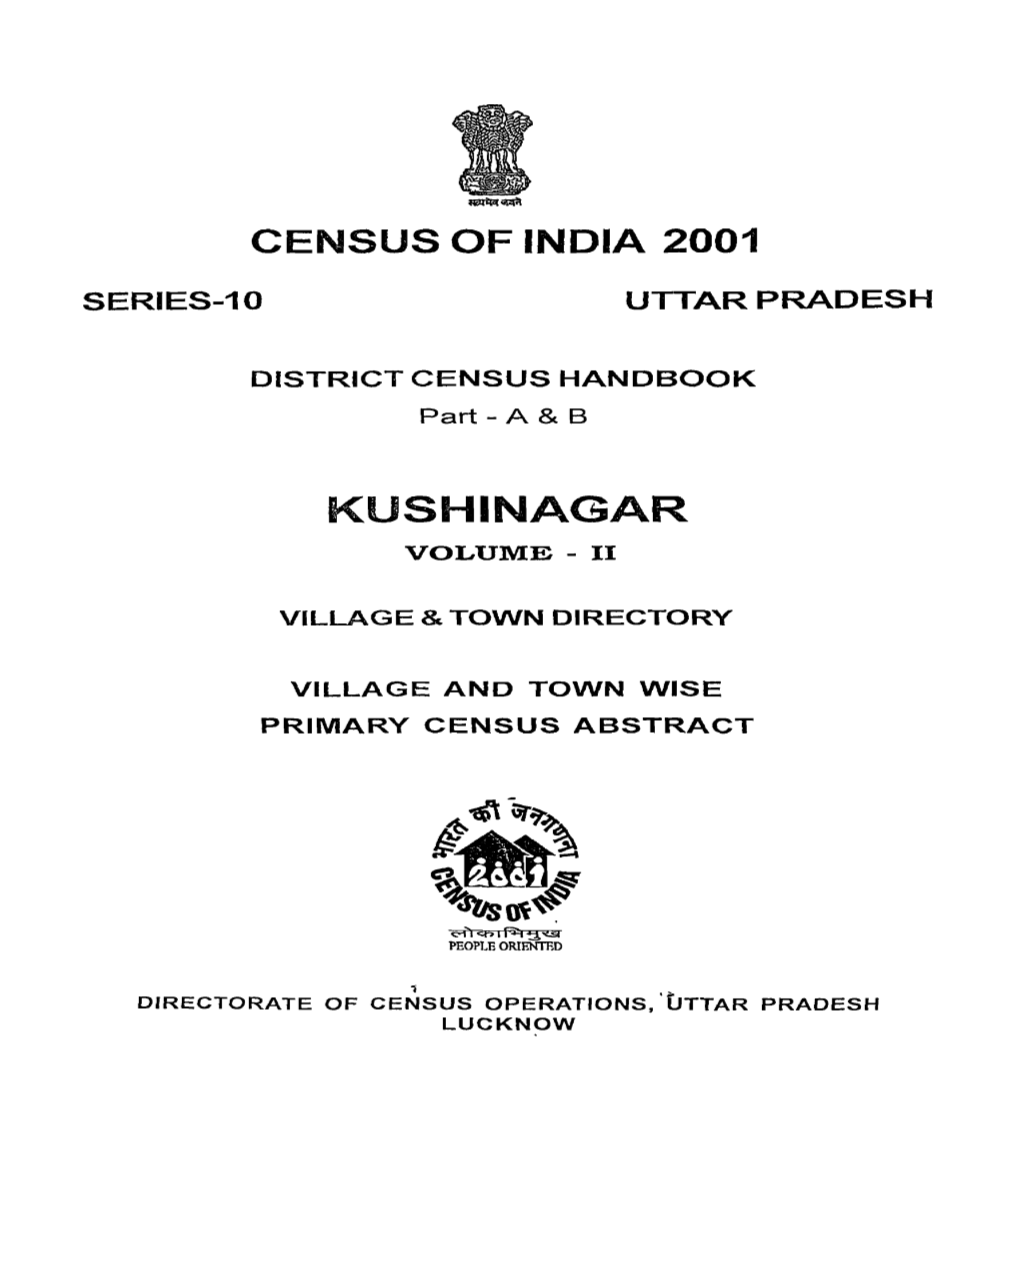 District Census Handbook, Kushinagar, Part XII-A & B, Vol-II, Series-10, Uttar Pradesh